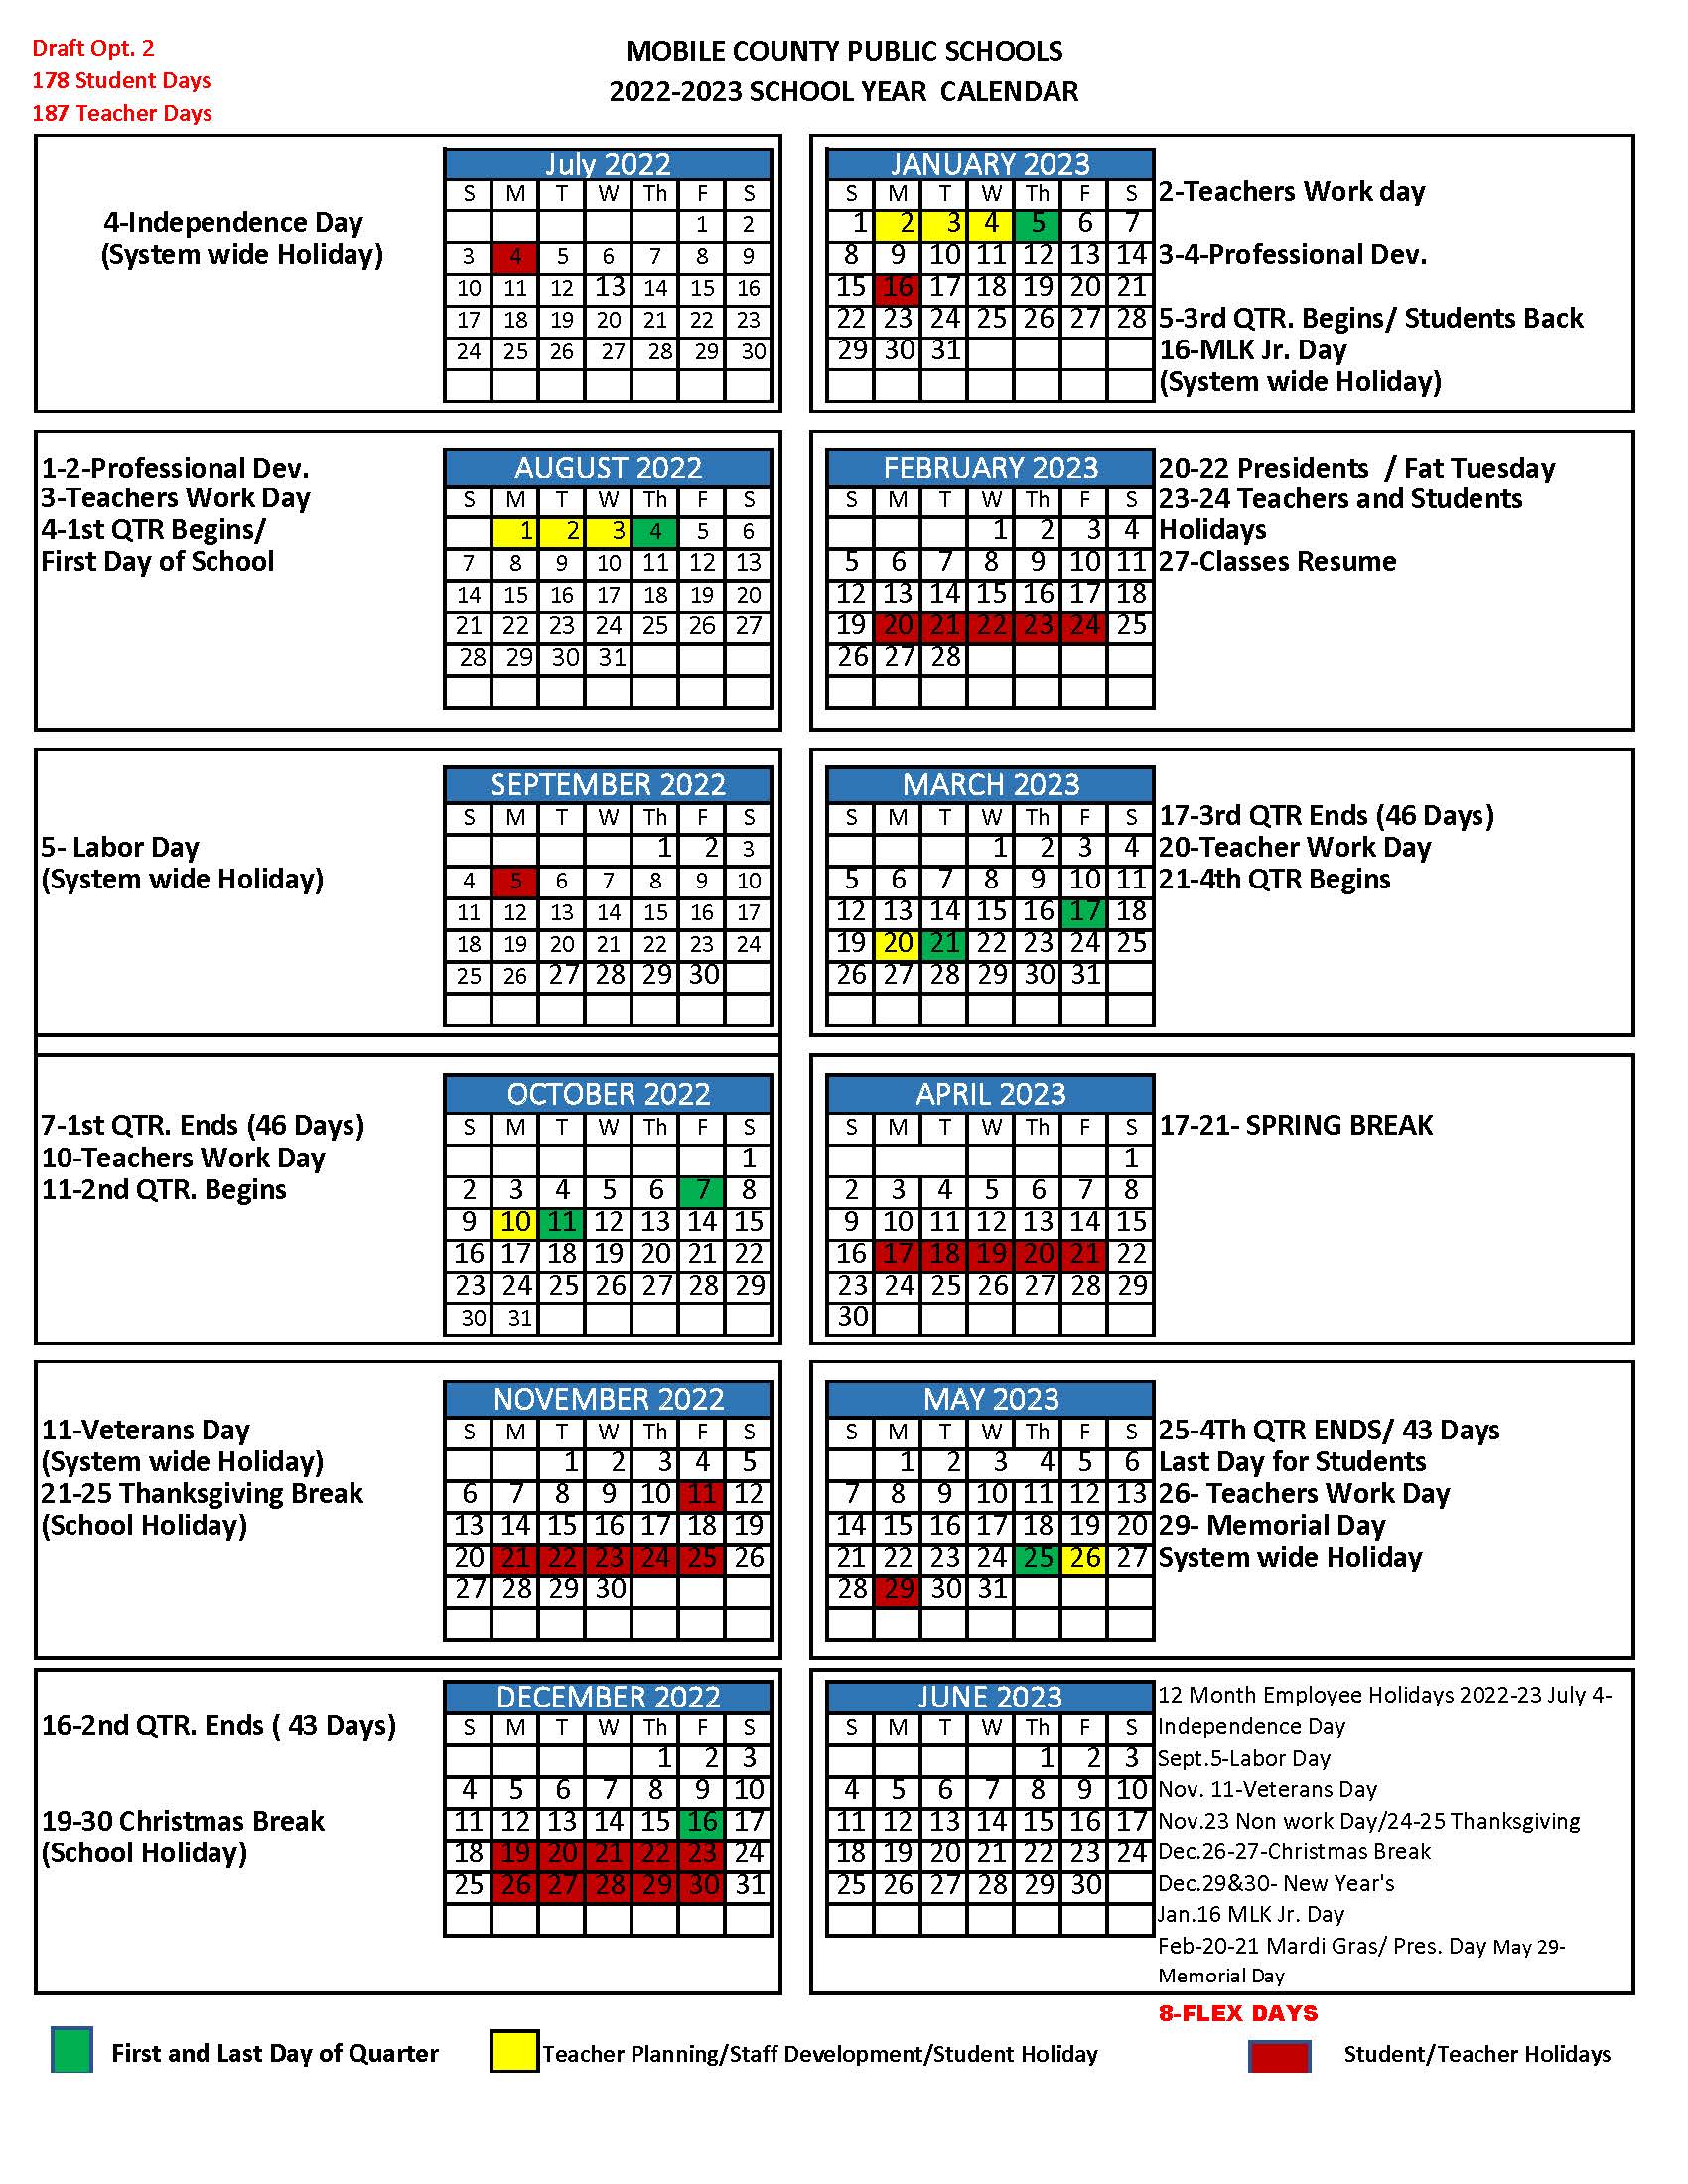 2022-2023 School calendar